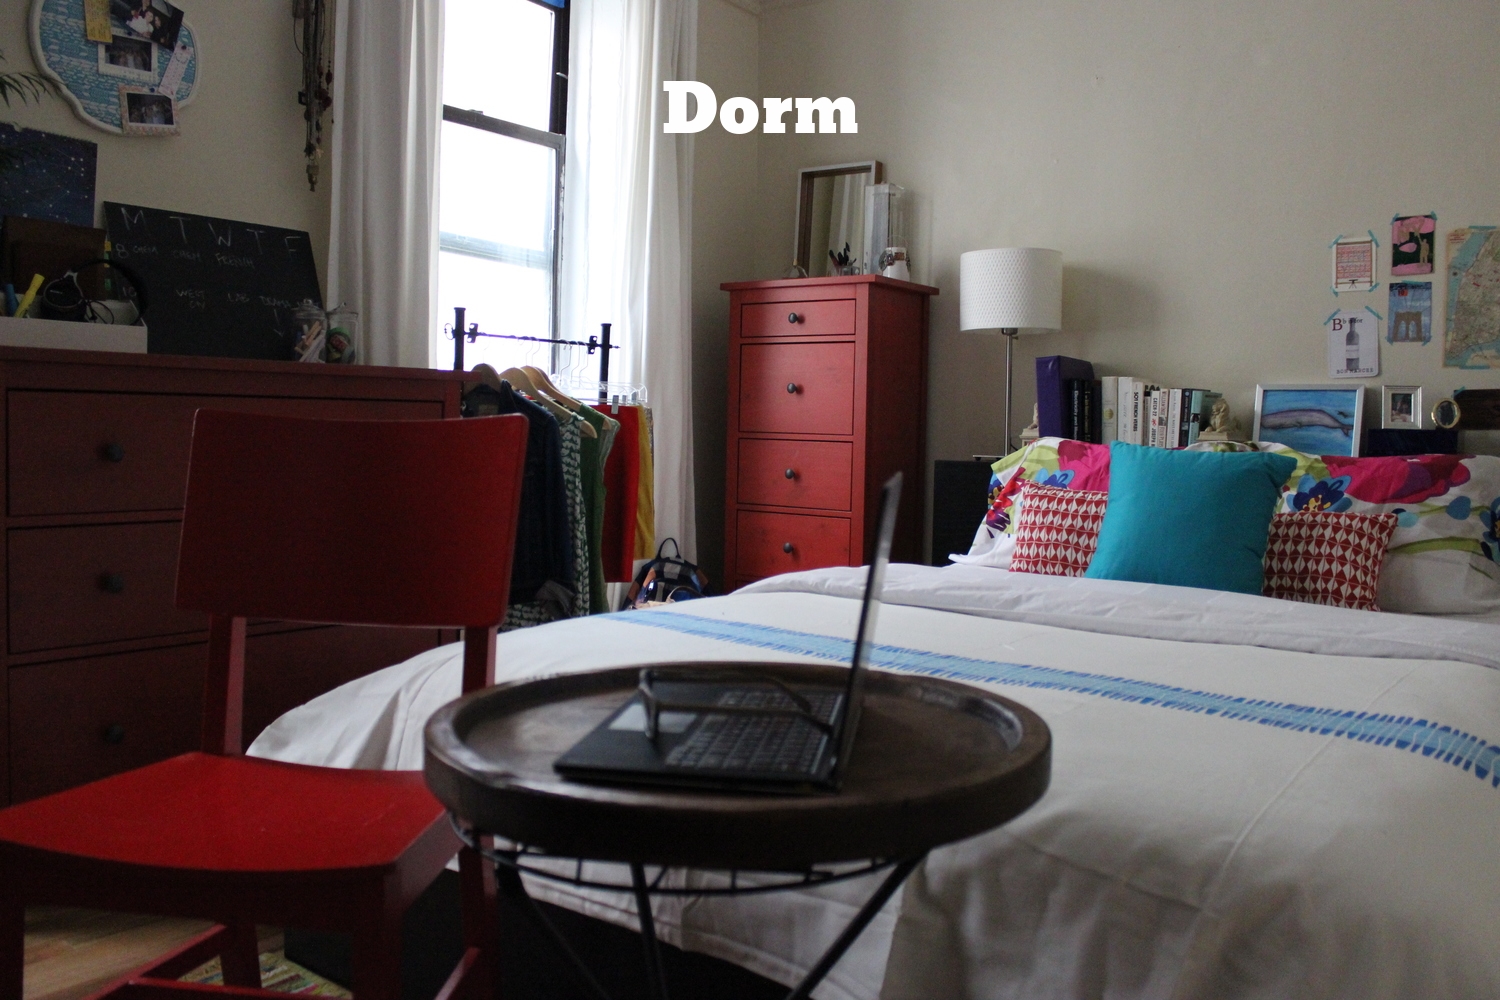 Dorm Bedroom Style